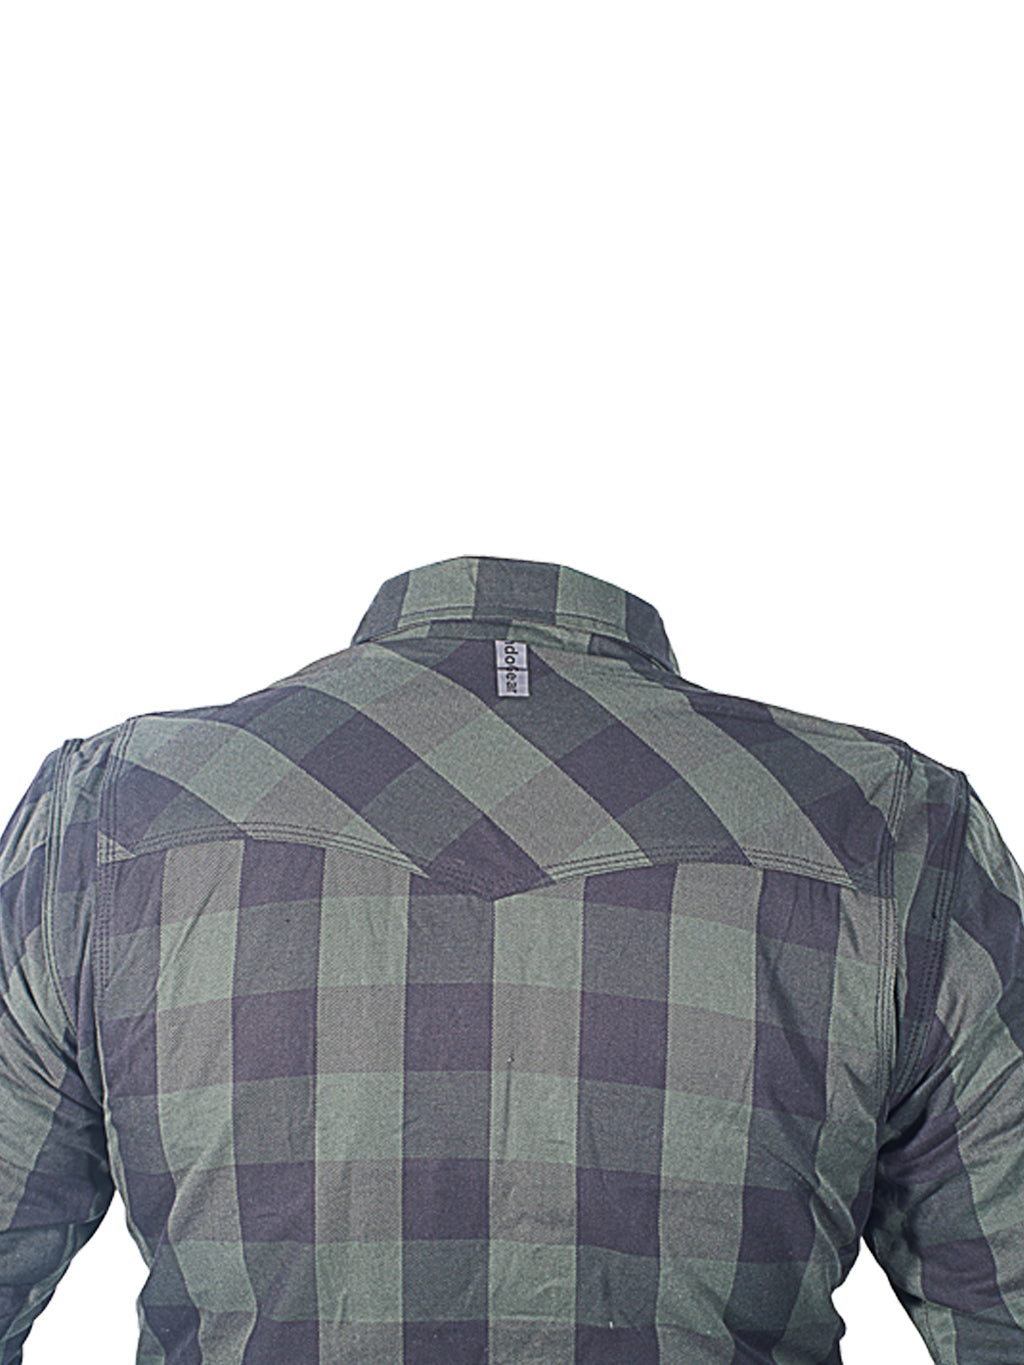 Cruiser Flannel Shirt | Cotton Flannel Shirt | EndoGear